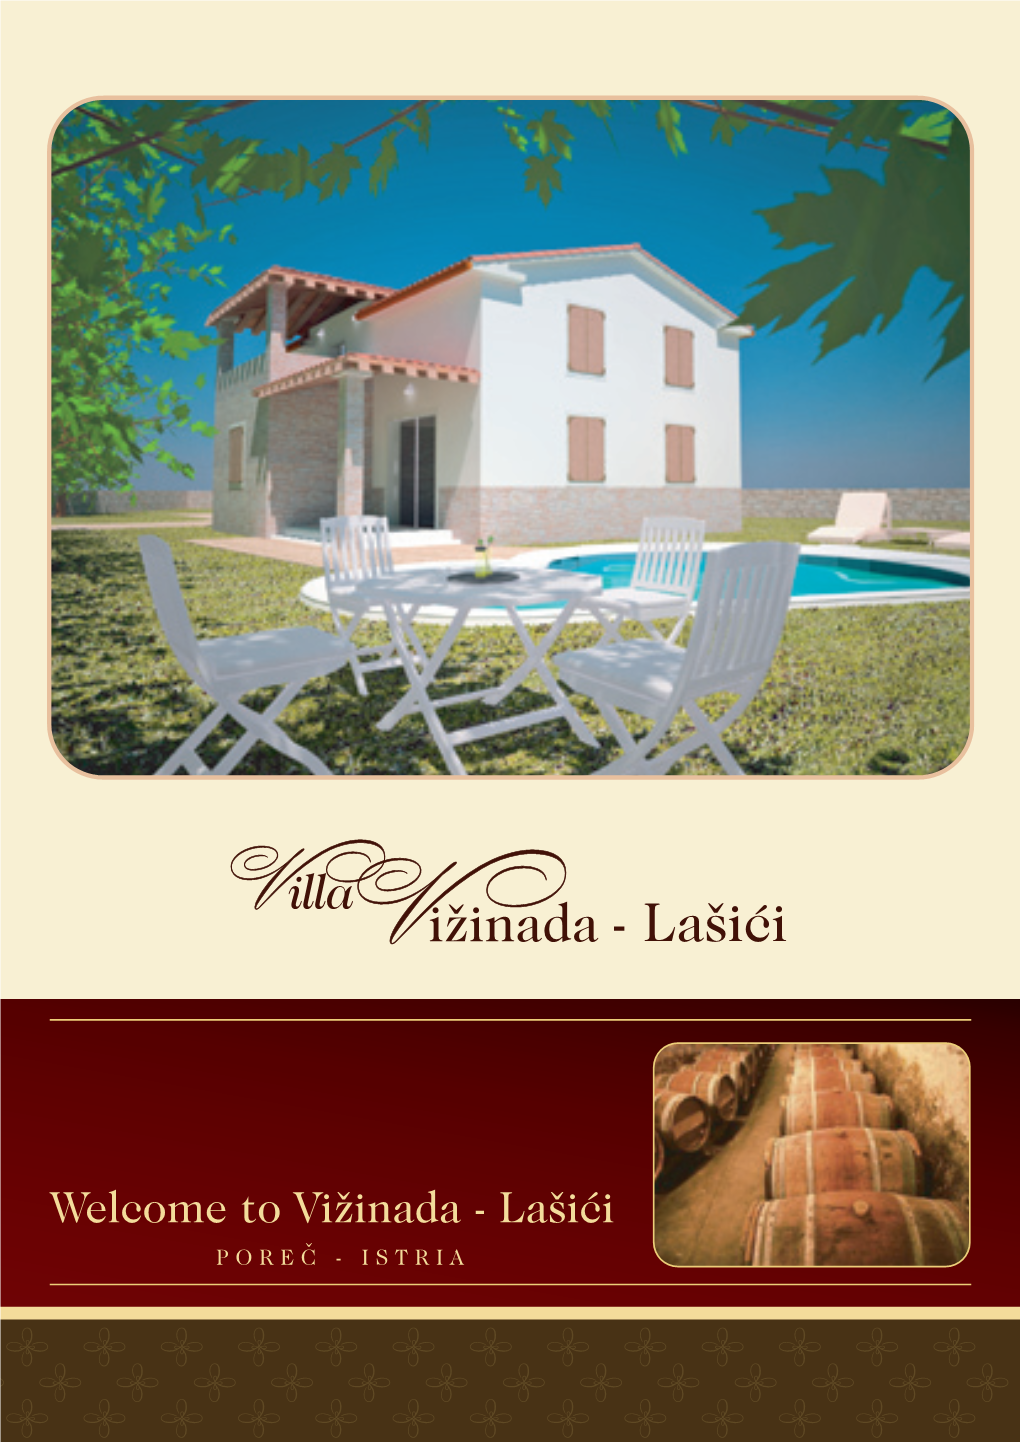 Welcome to Vižinada - Lašici PORECˇ - ISTRIA Toon@Hizanekretnine.Net Istria Visualization